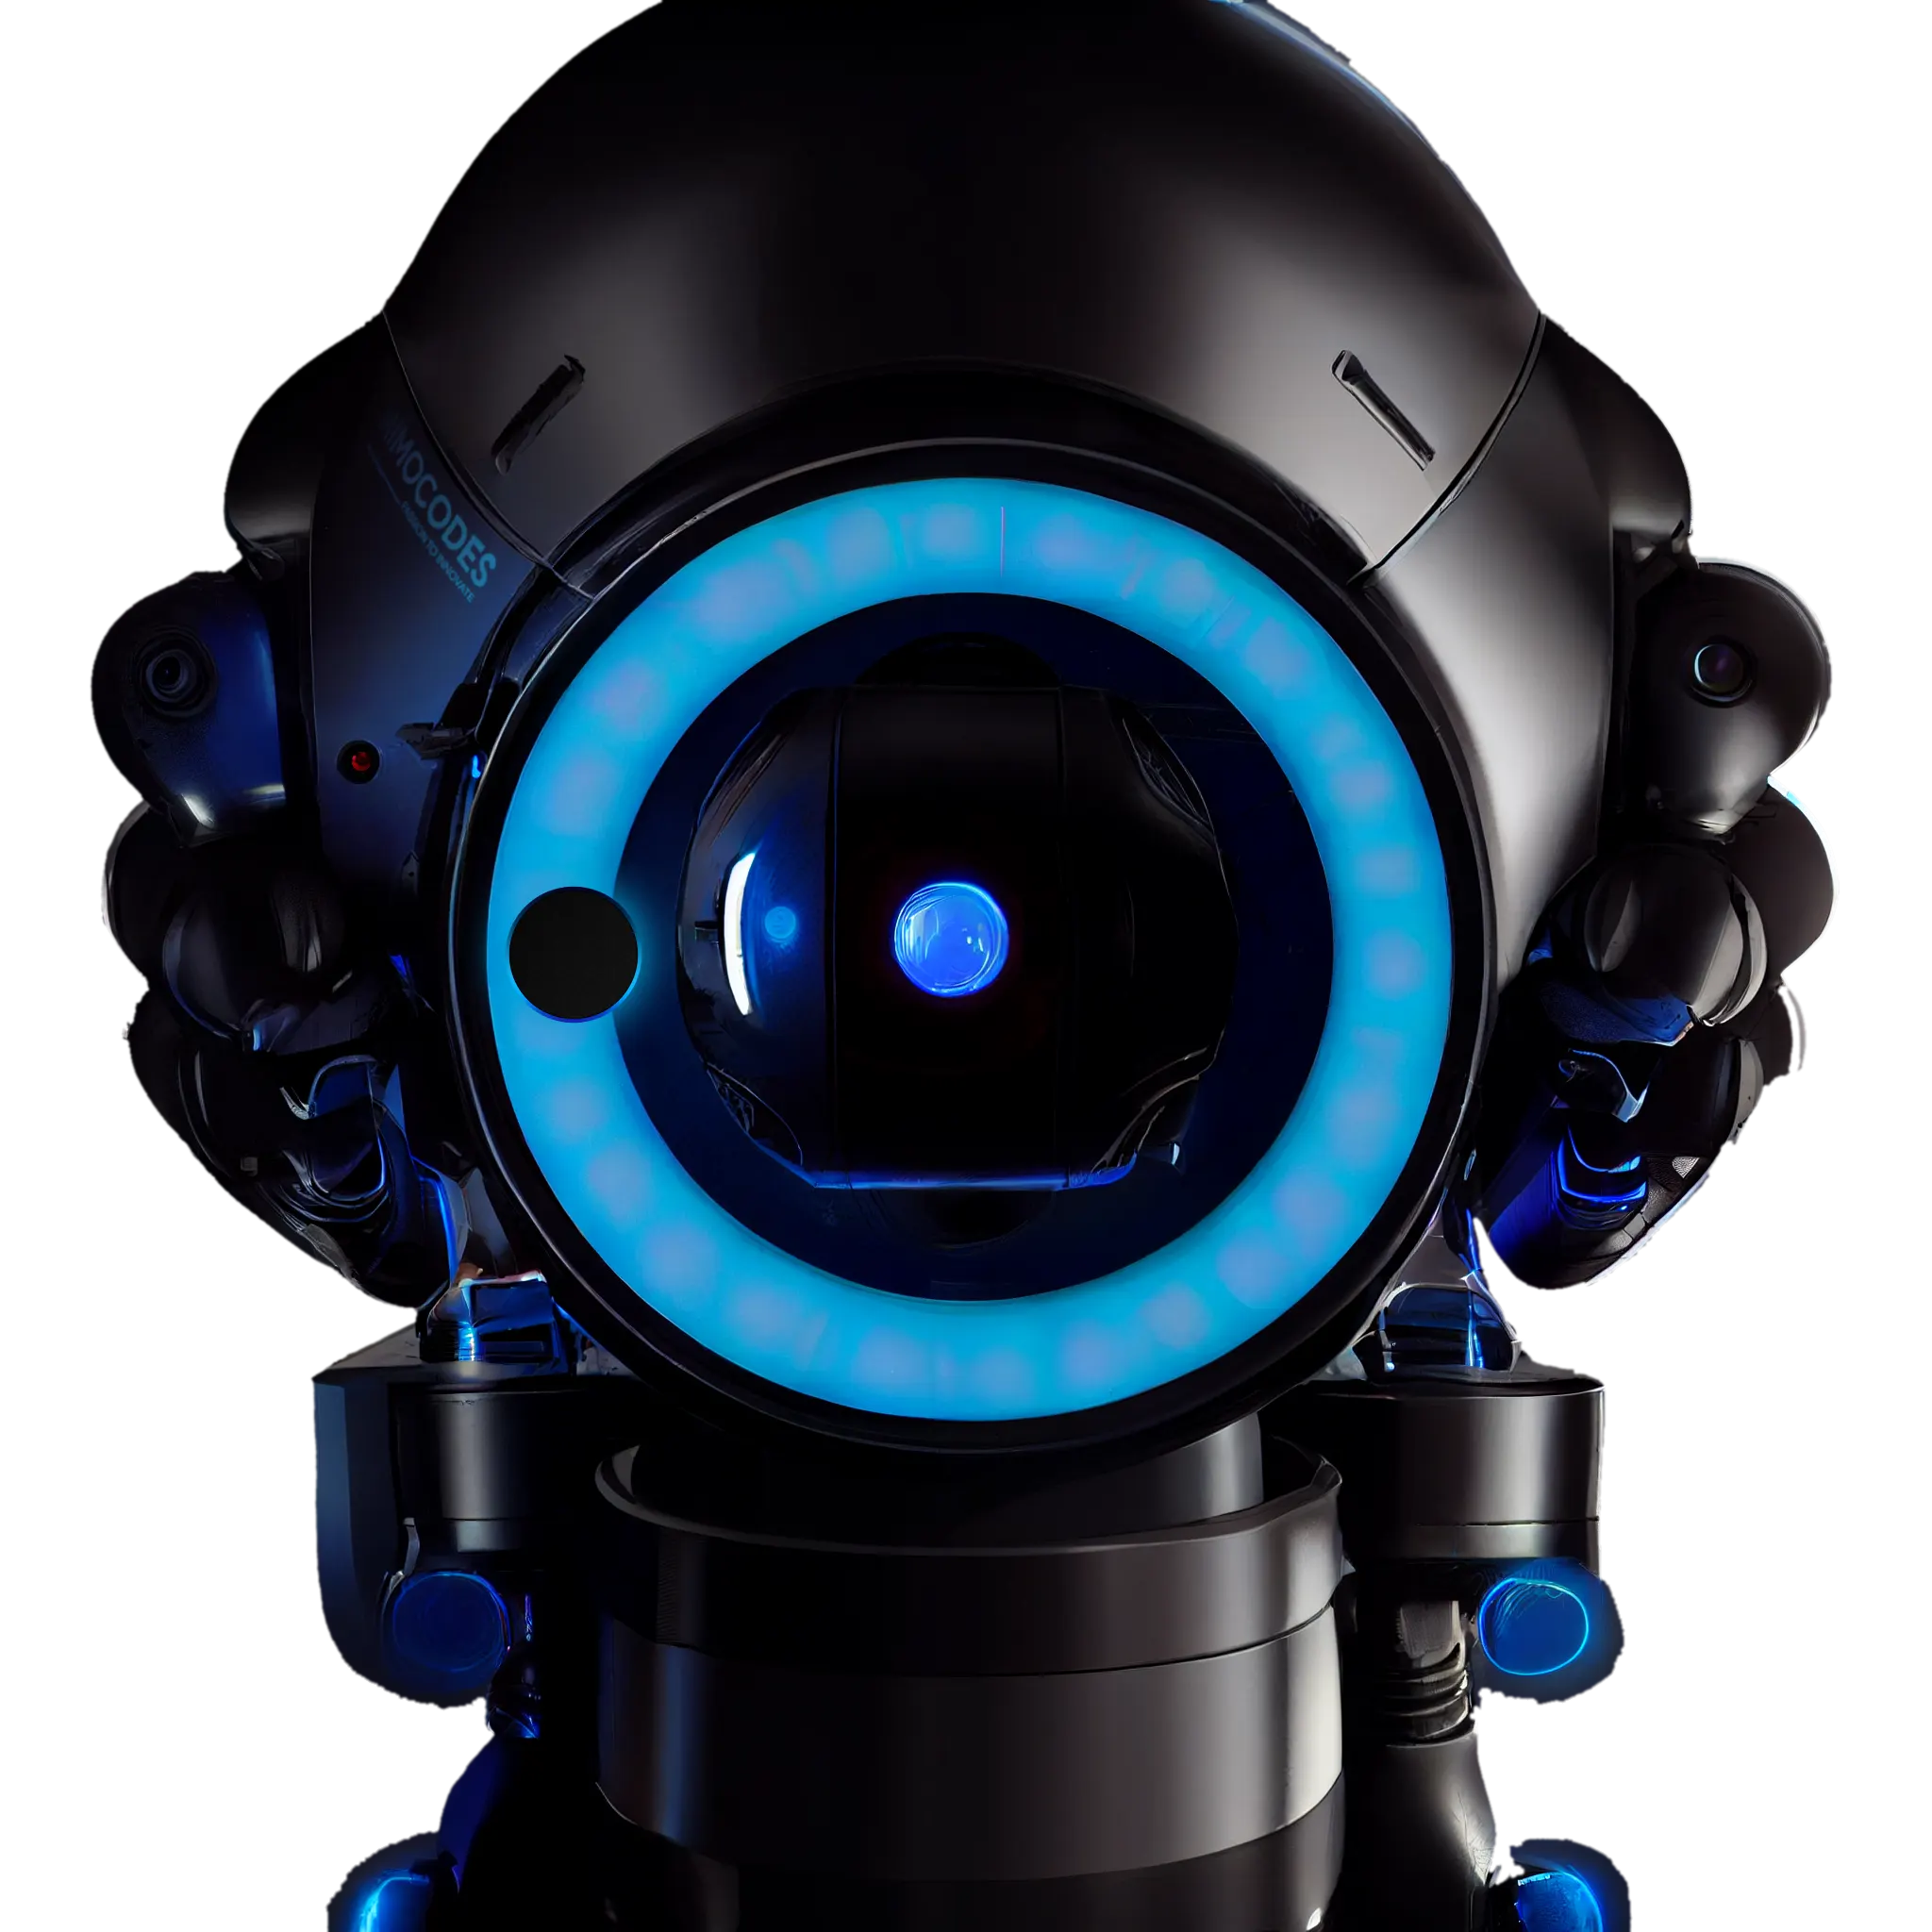 Mimocodes robot character